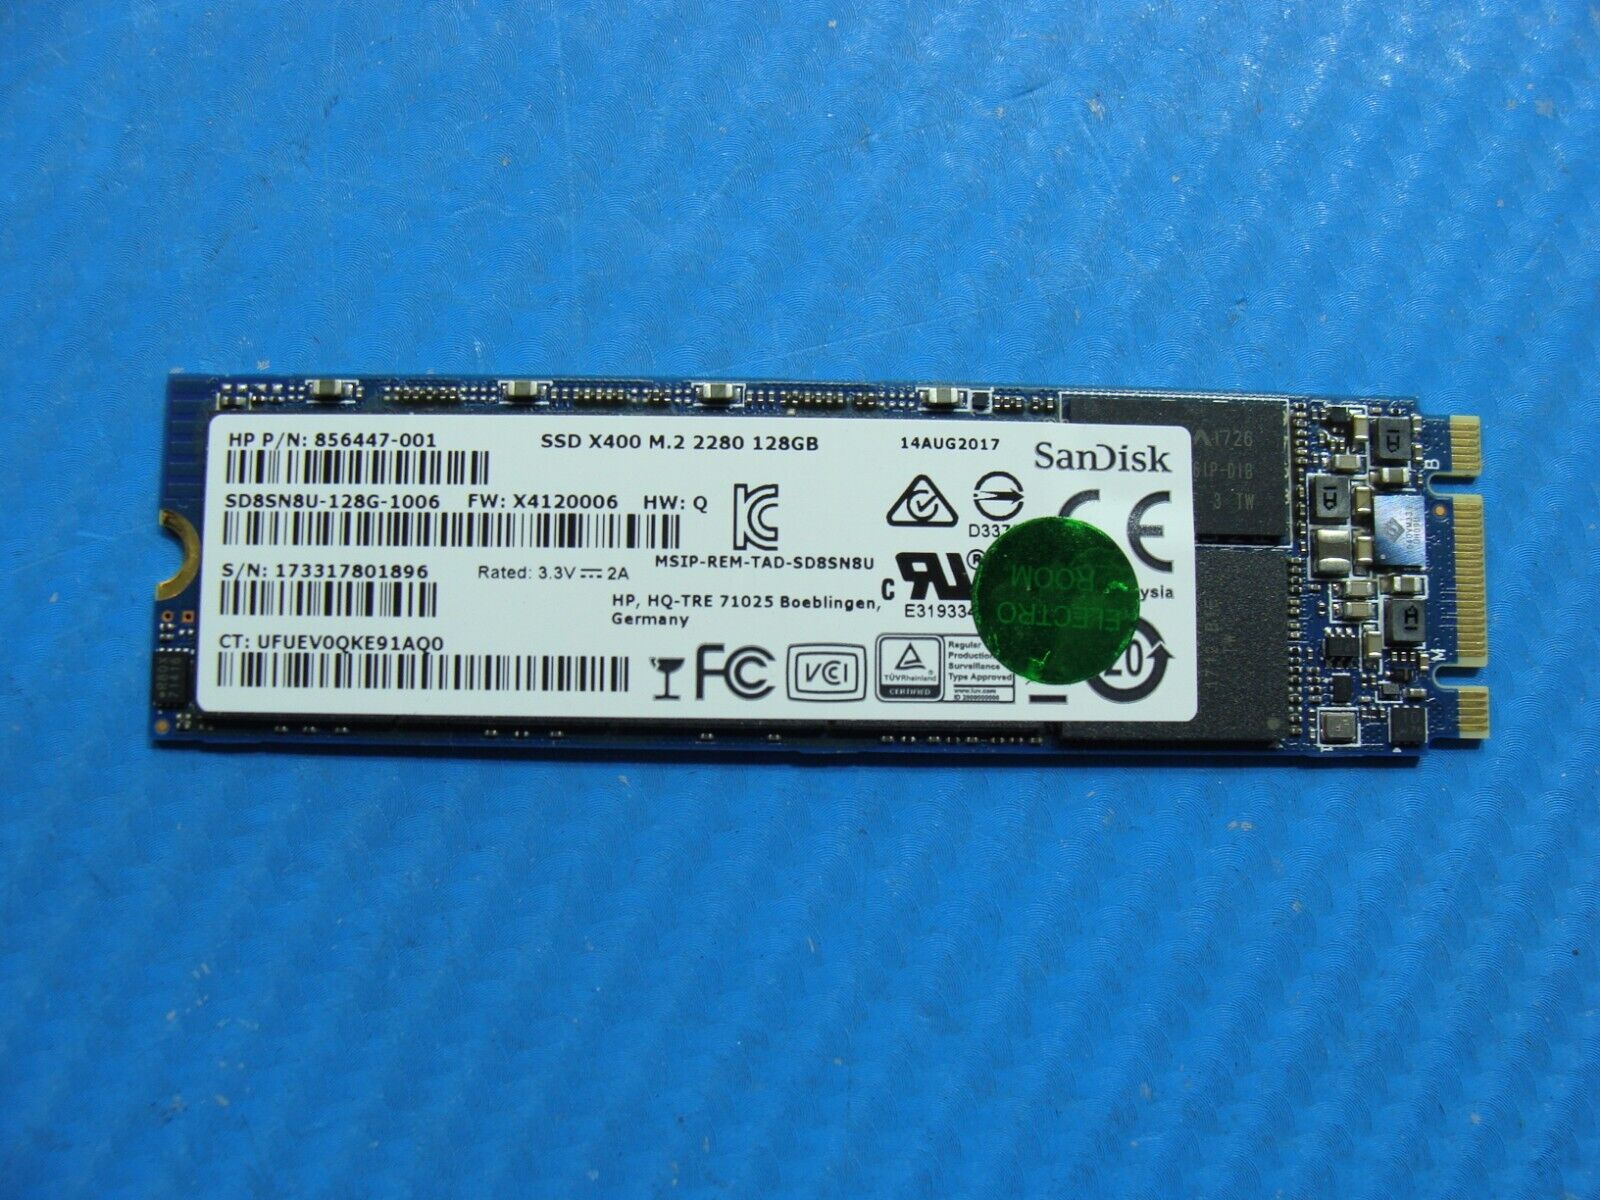 HP 17-w220nr SanDisk 128GB M.2 SATA SSD Solid State Drive SD8SN8U-128G-1006